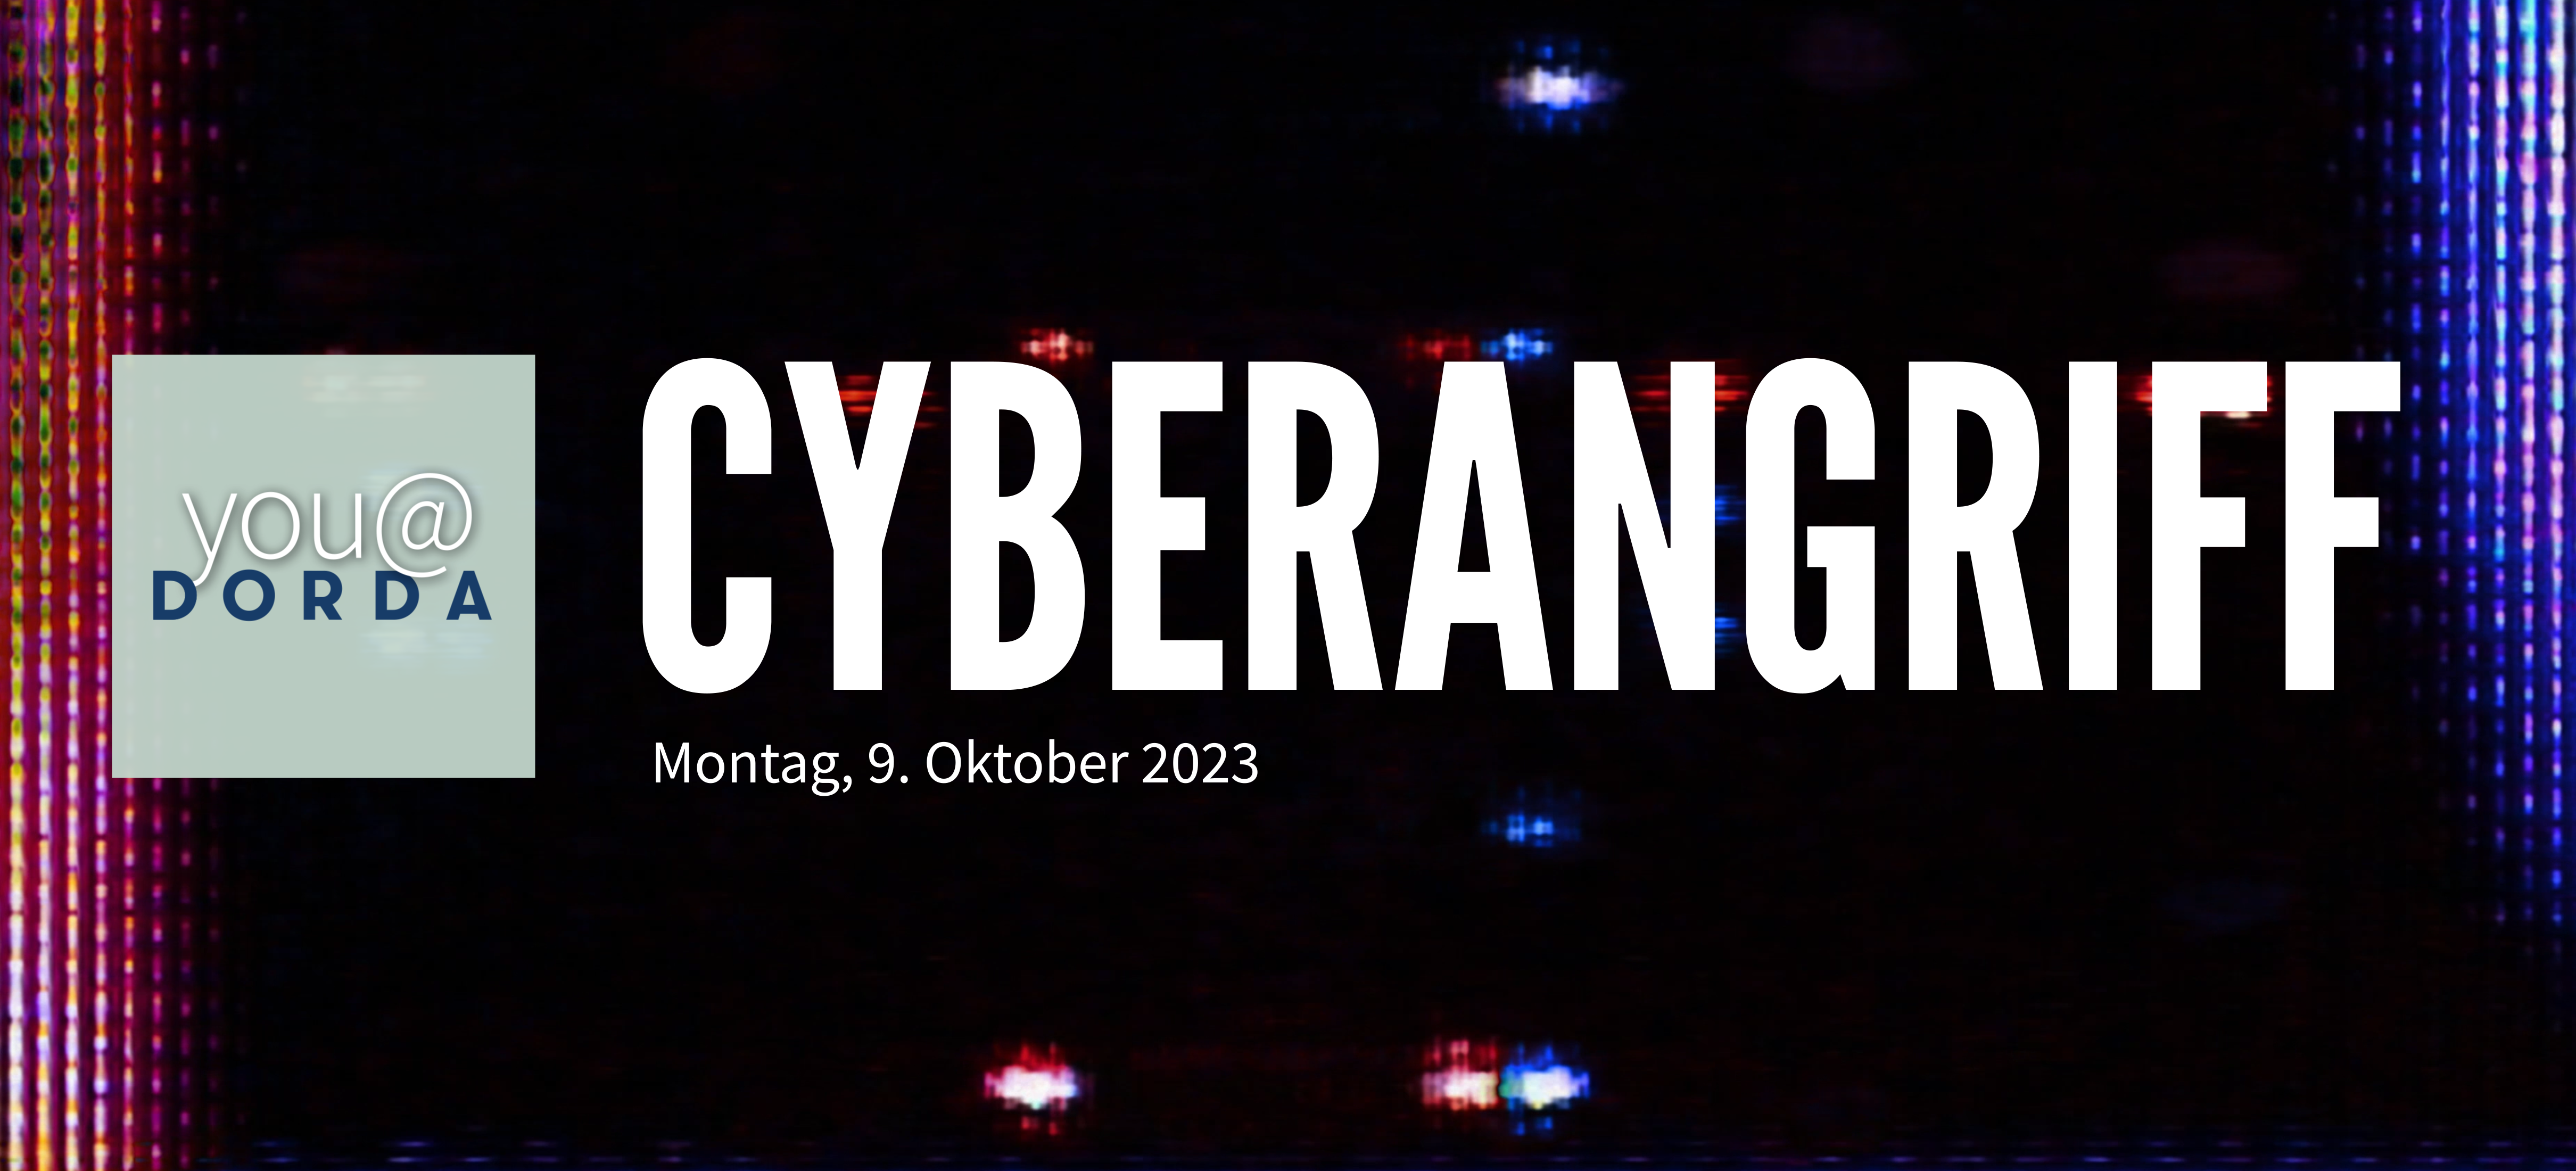 You@DORDA Student Workshop 2023 Cyberangriff